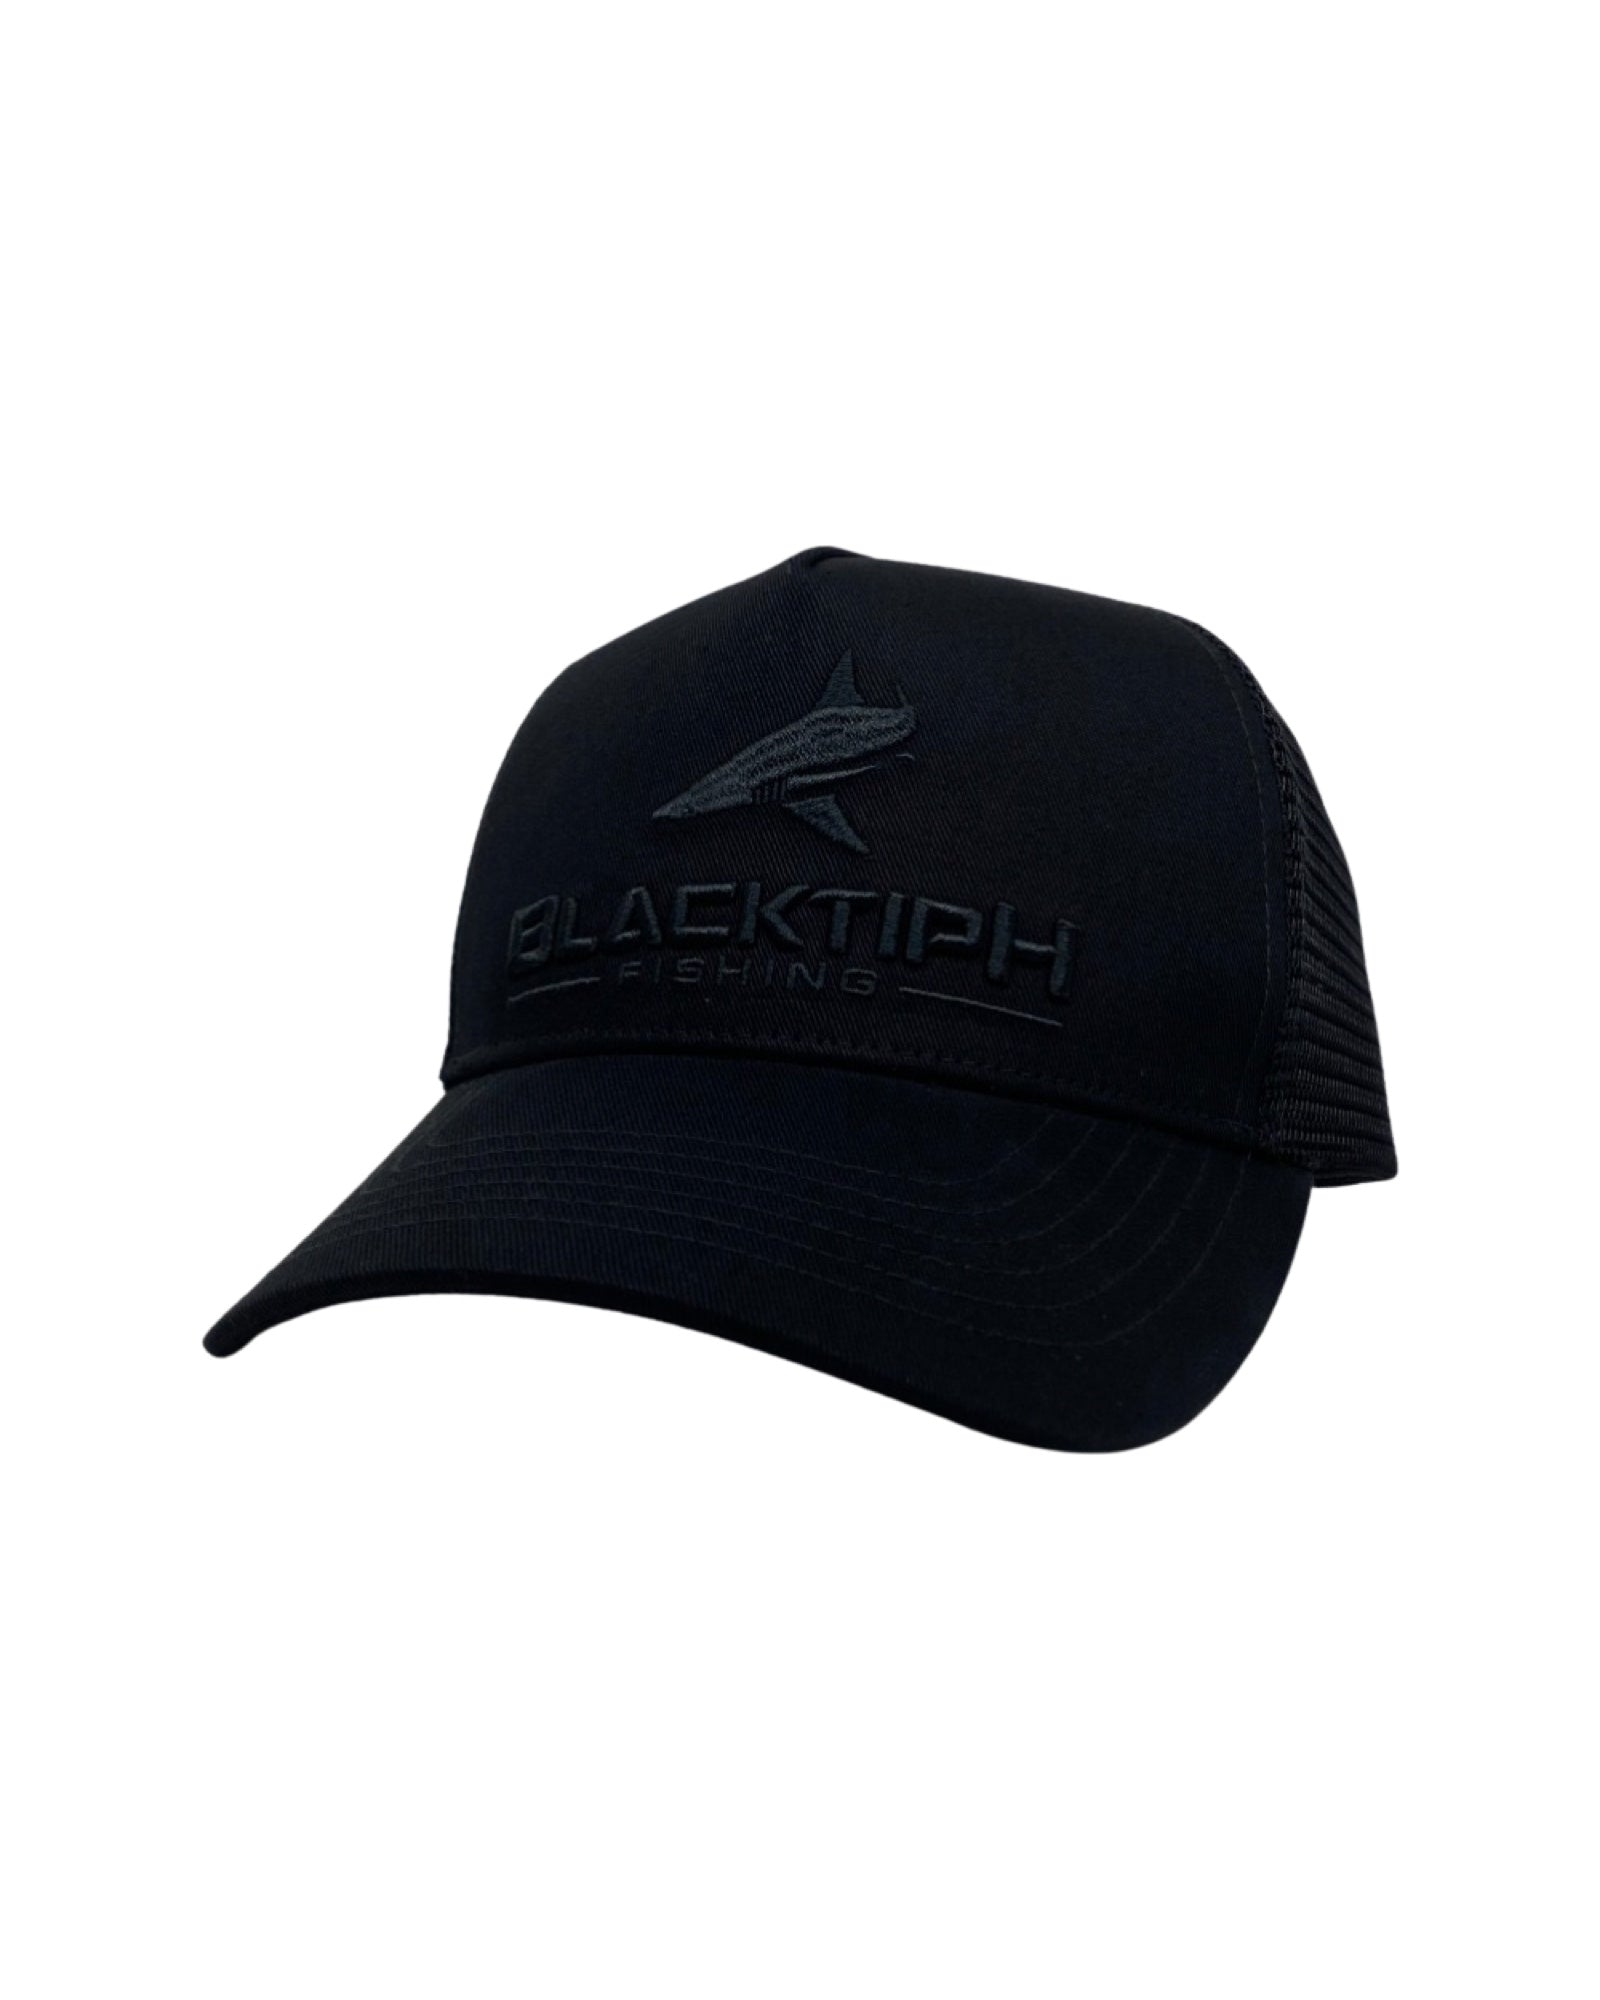 BlacktipH Midnight Black Embroidered Snapback 2.0 Cap